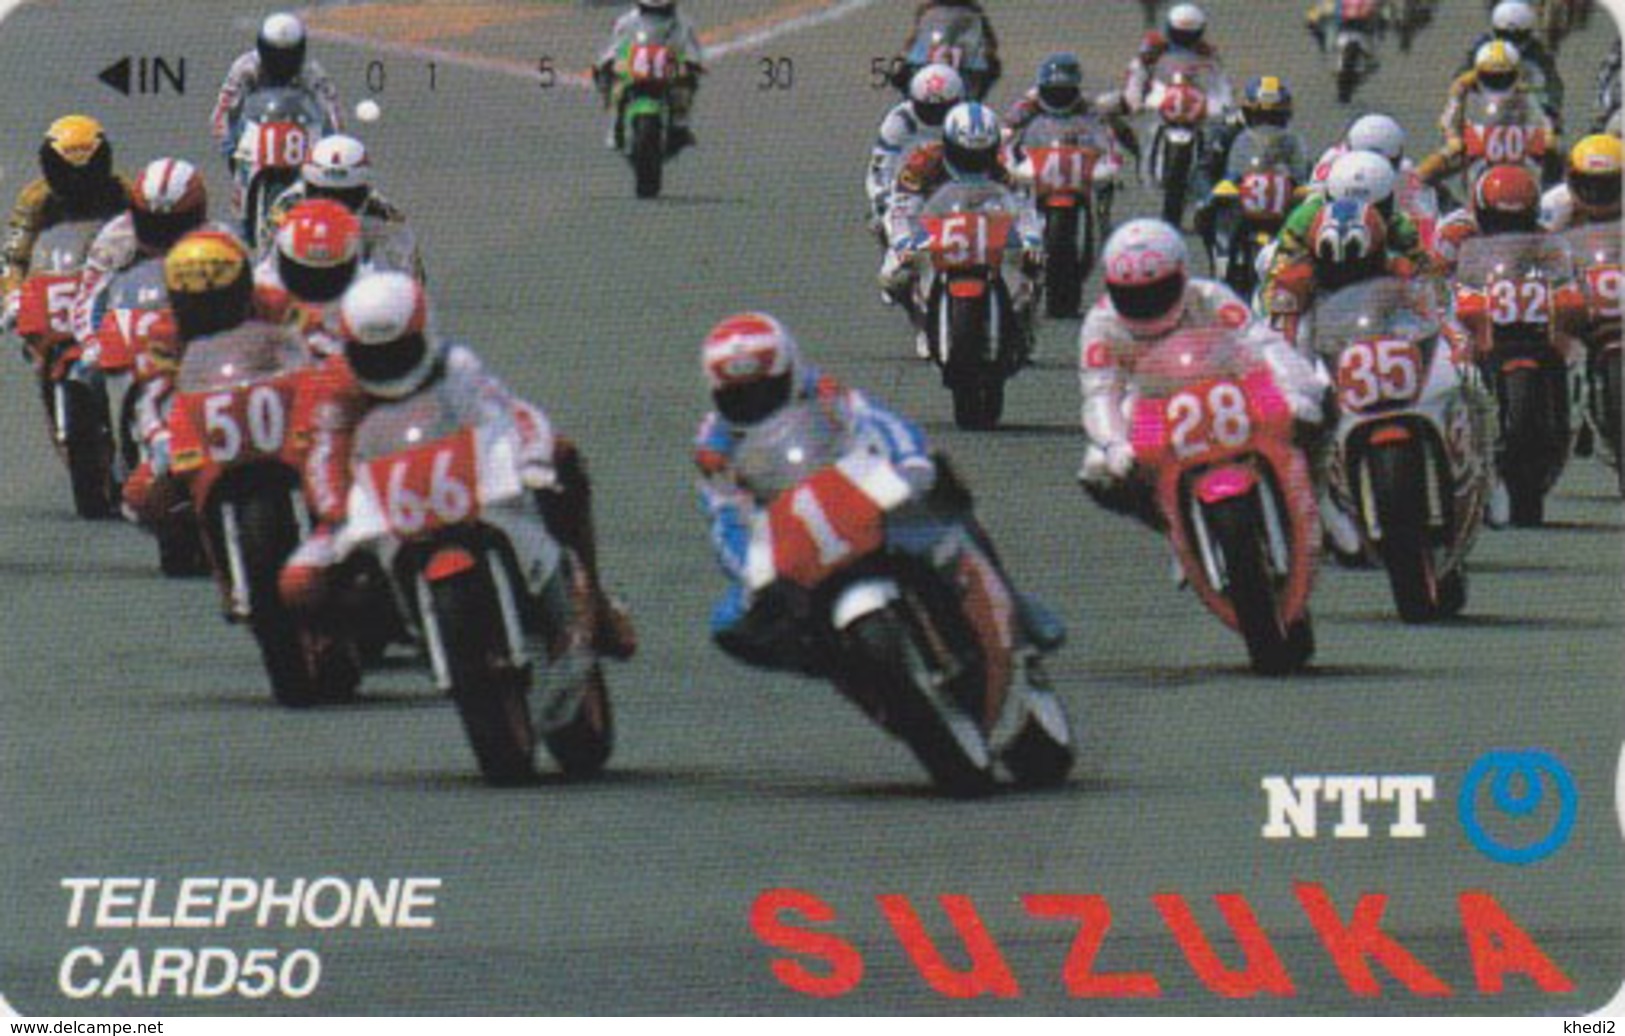 Télécarte Japon / NTT 290-038 ** ONE PUNCH ** - MOTO / SUZUKA - MOTOR BIKE RACE Japan Phonecard - Motorfietsen